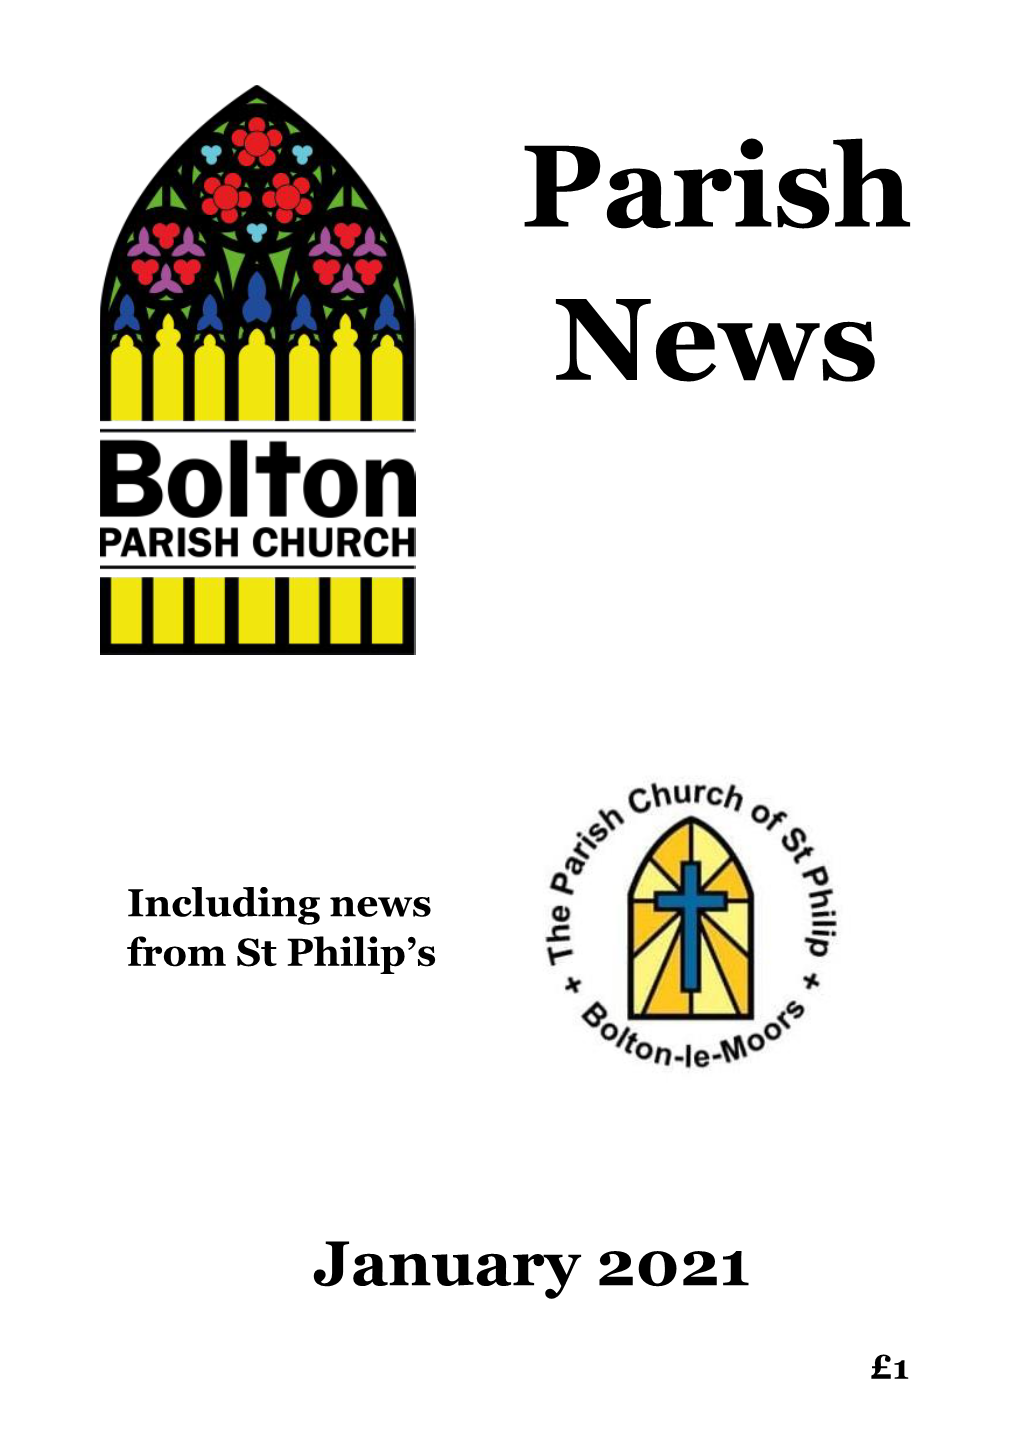 Parish News January 2021